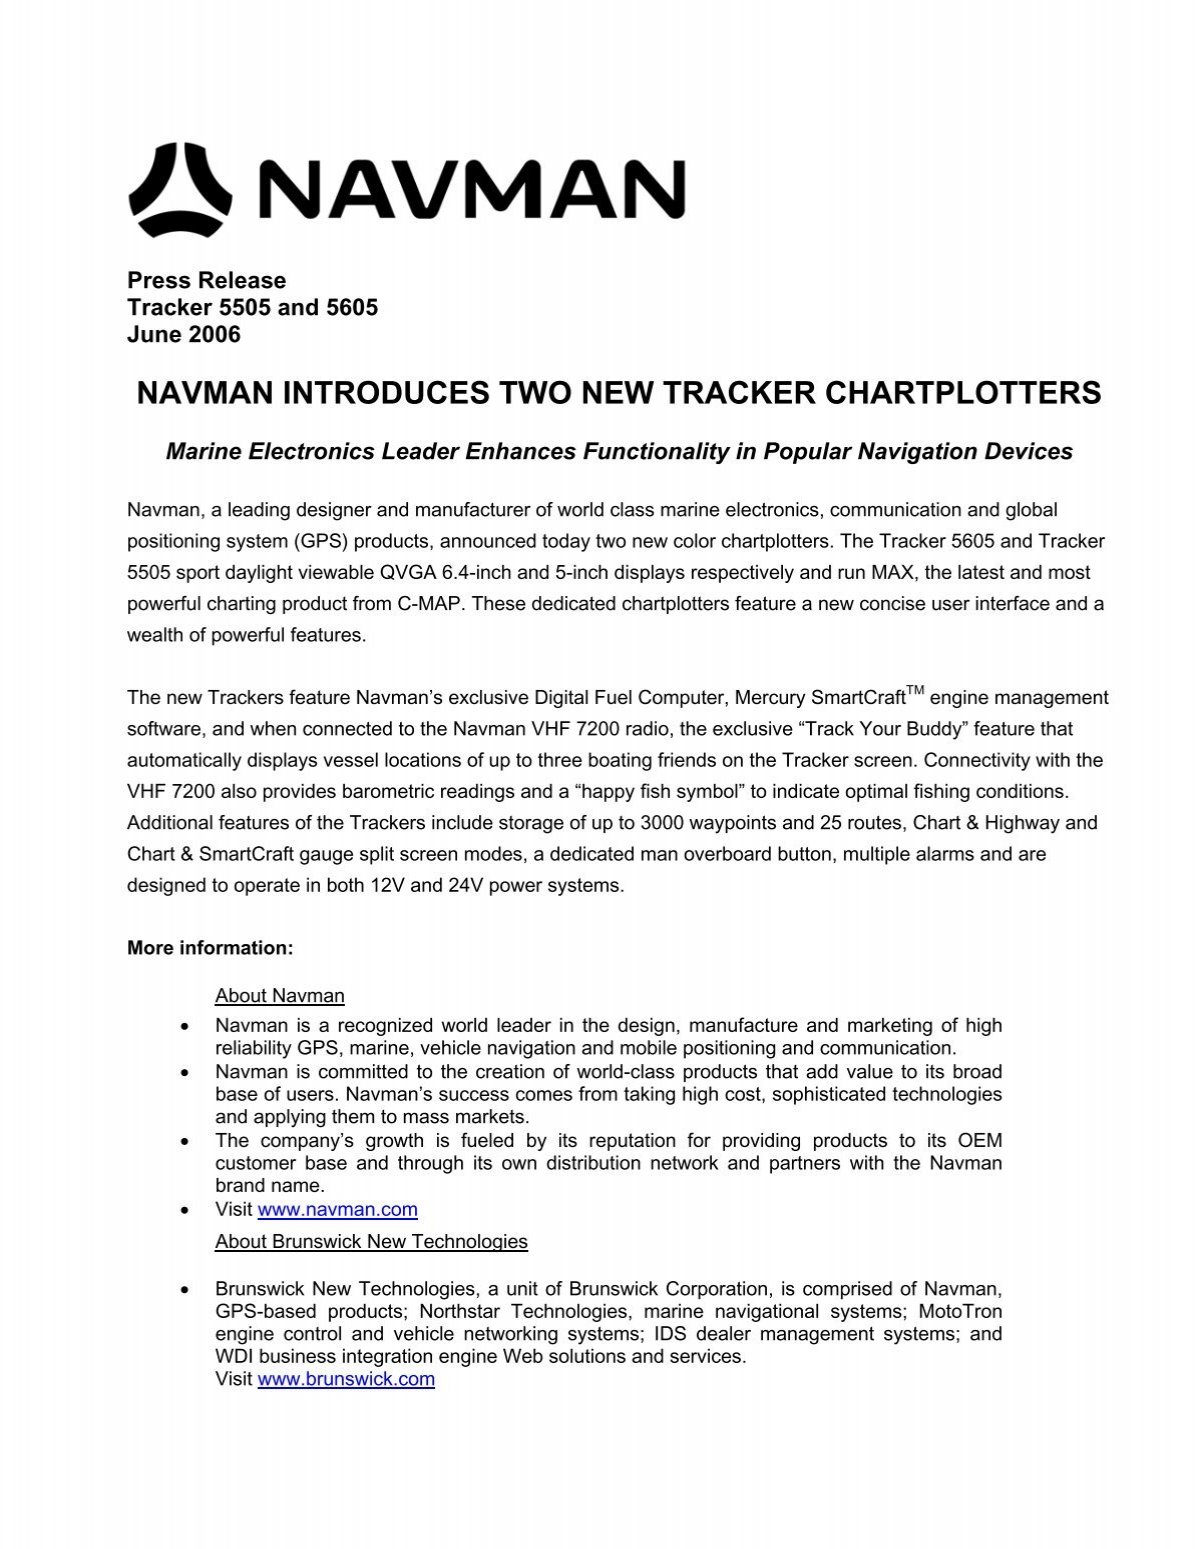 Navman Tracker 5500 C Map Charts